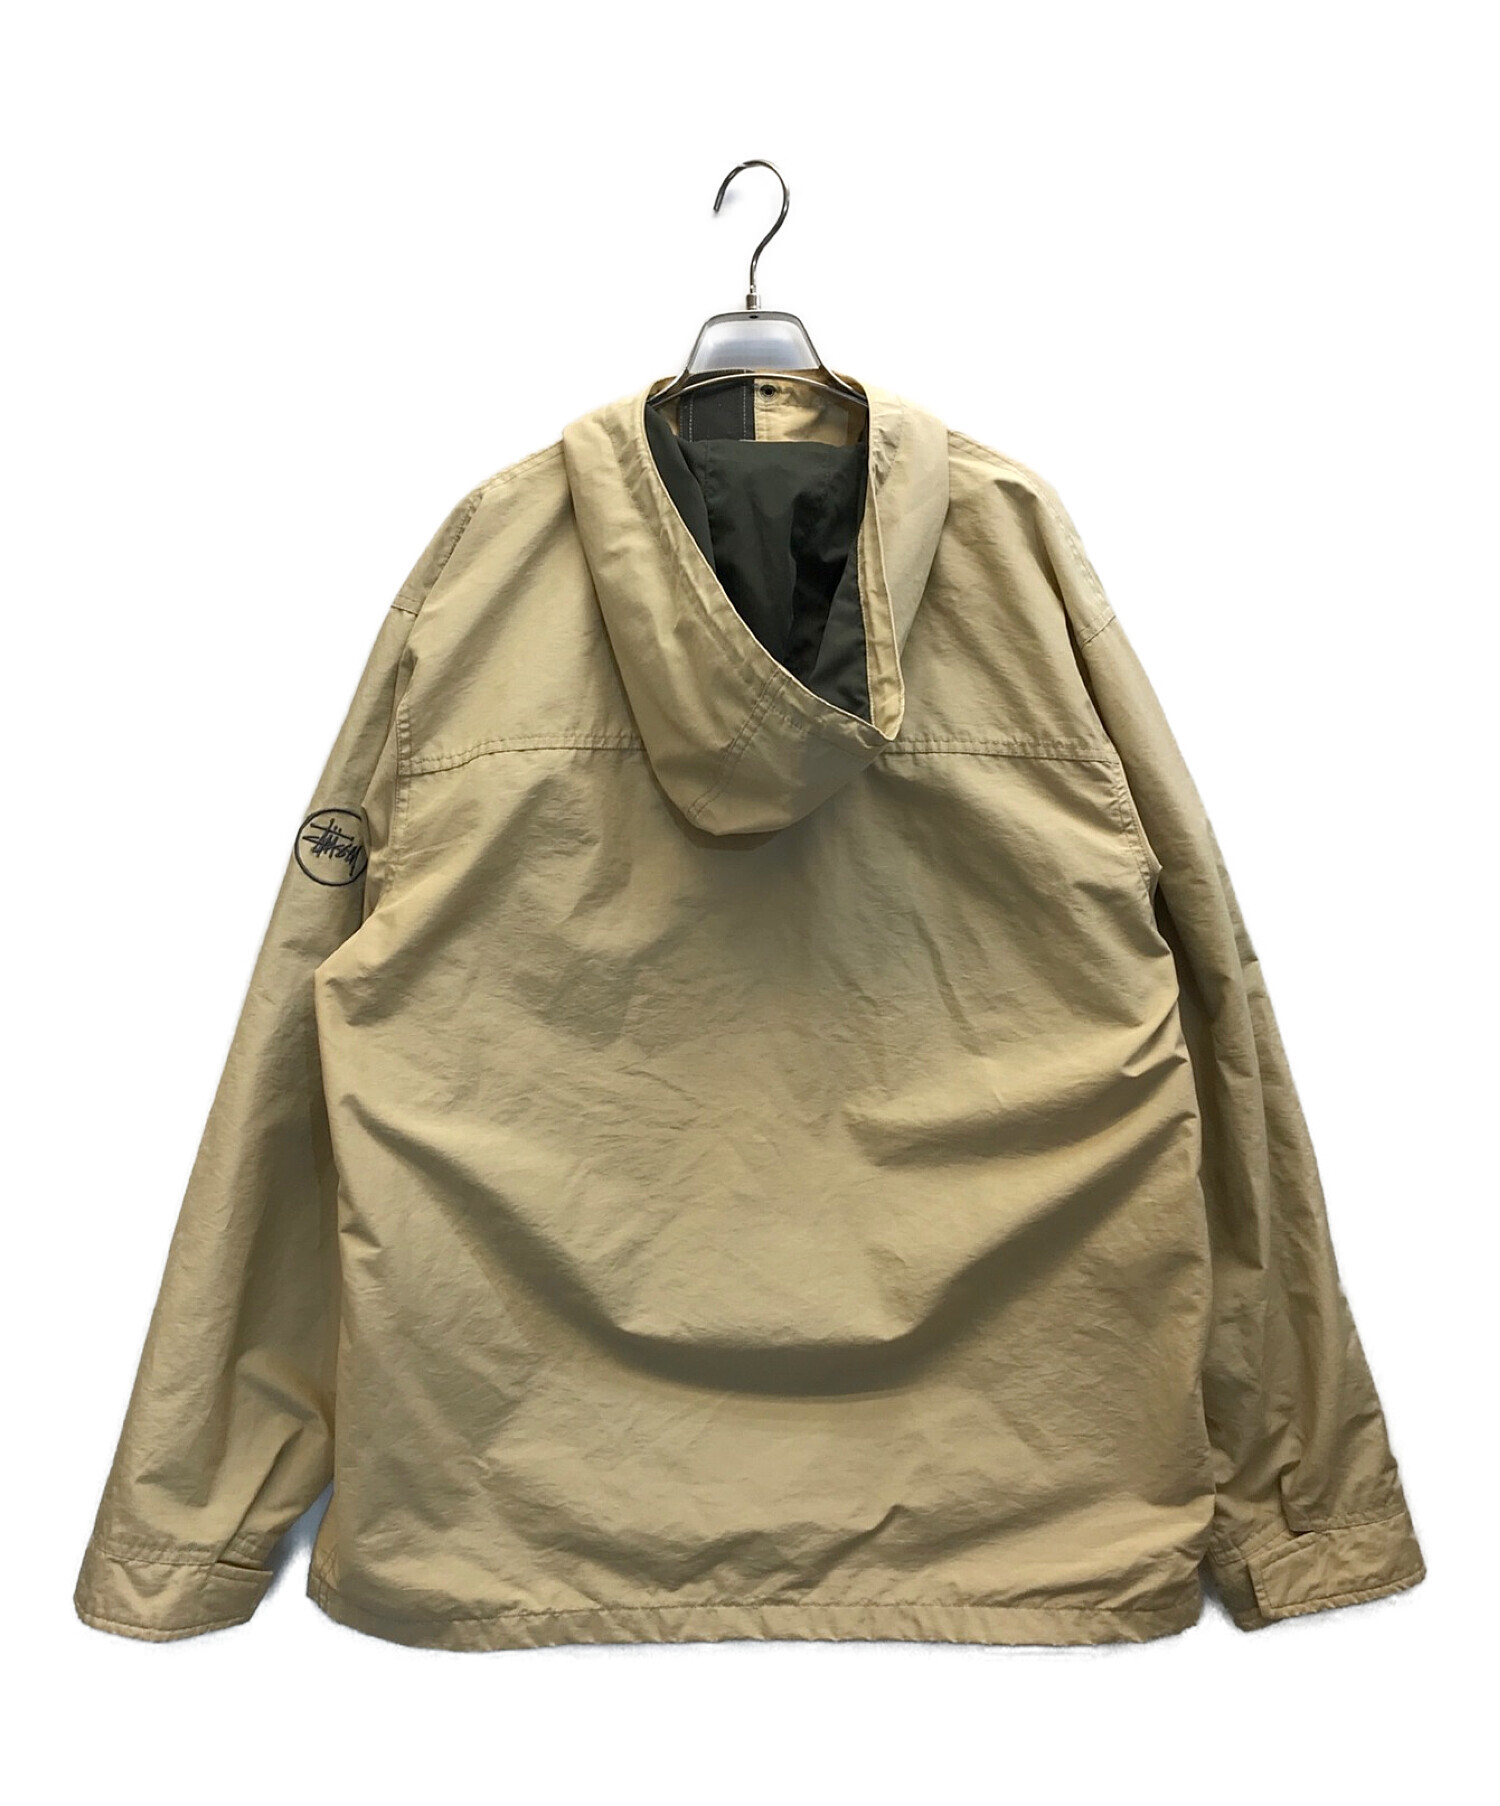 00’ Old stussy jacket